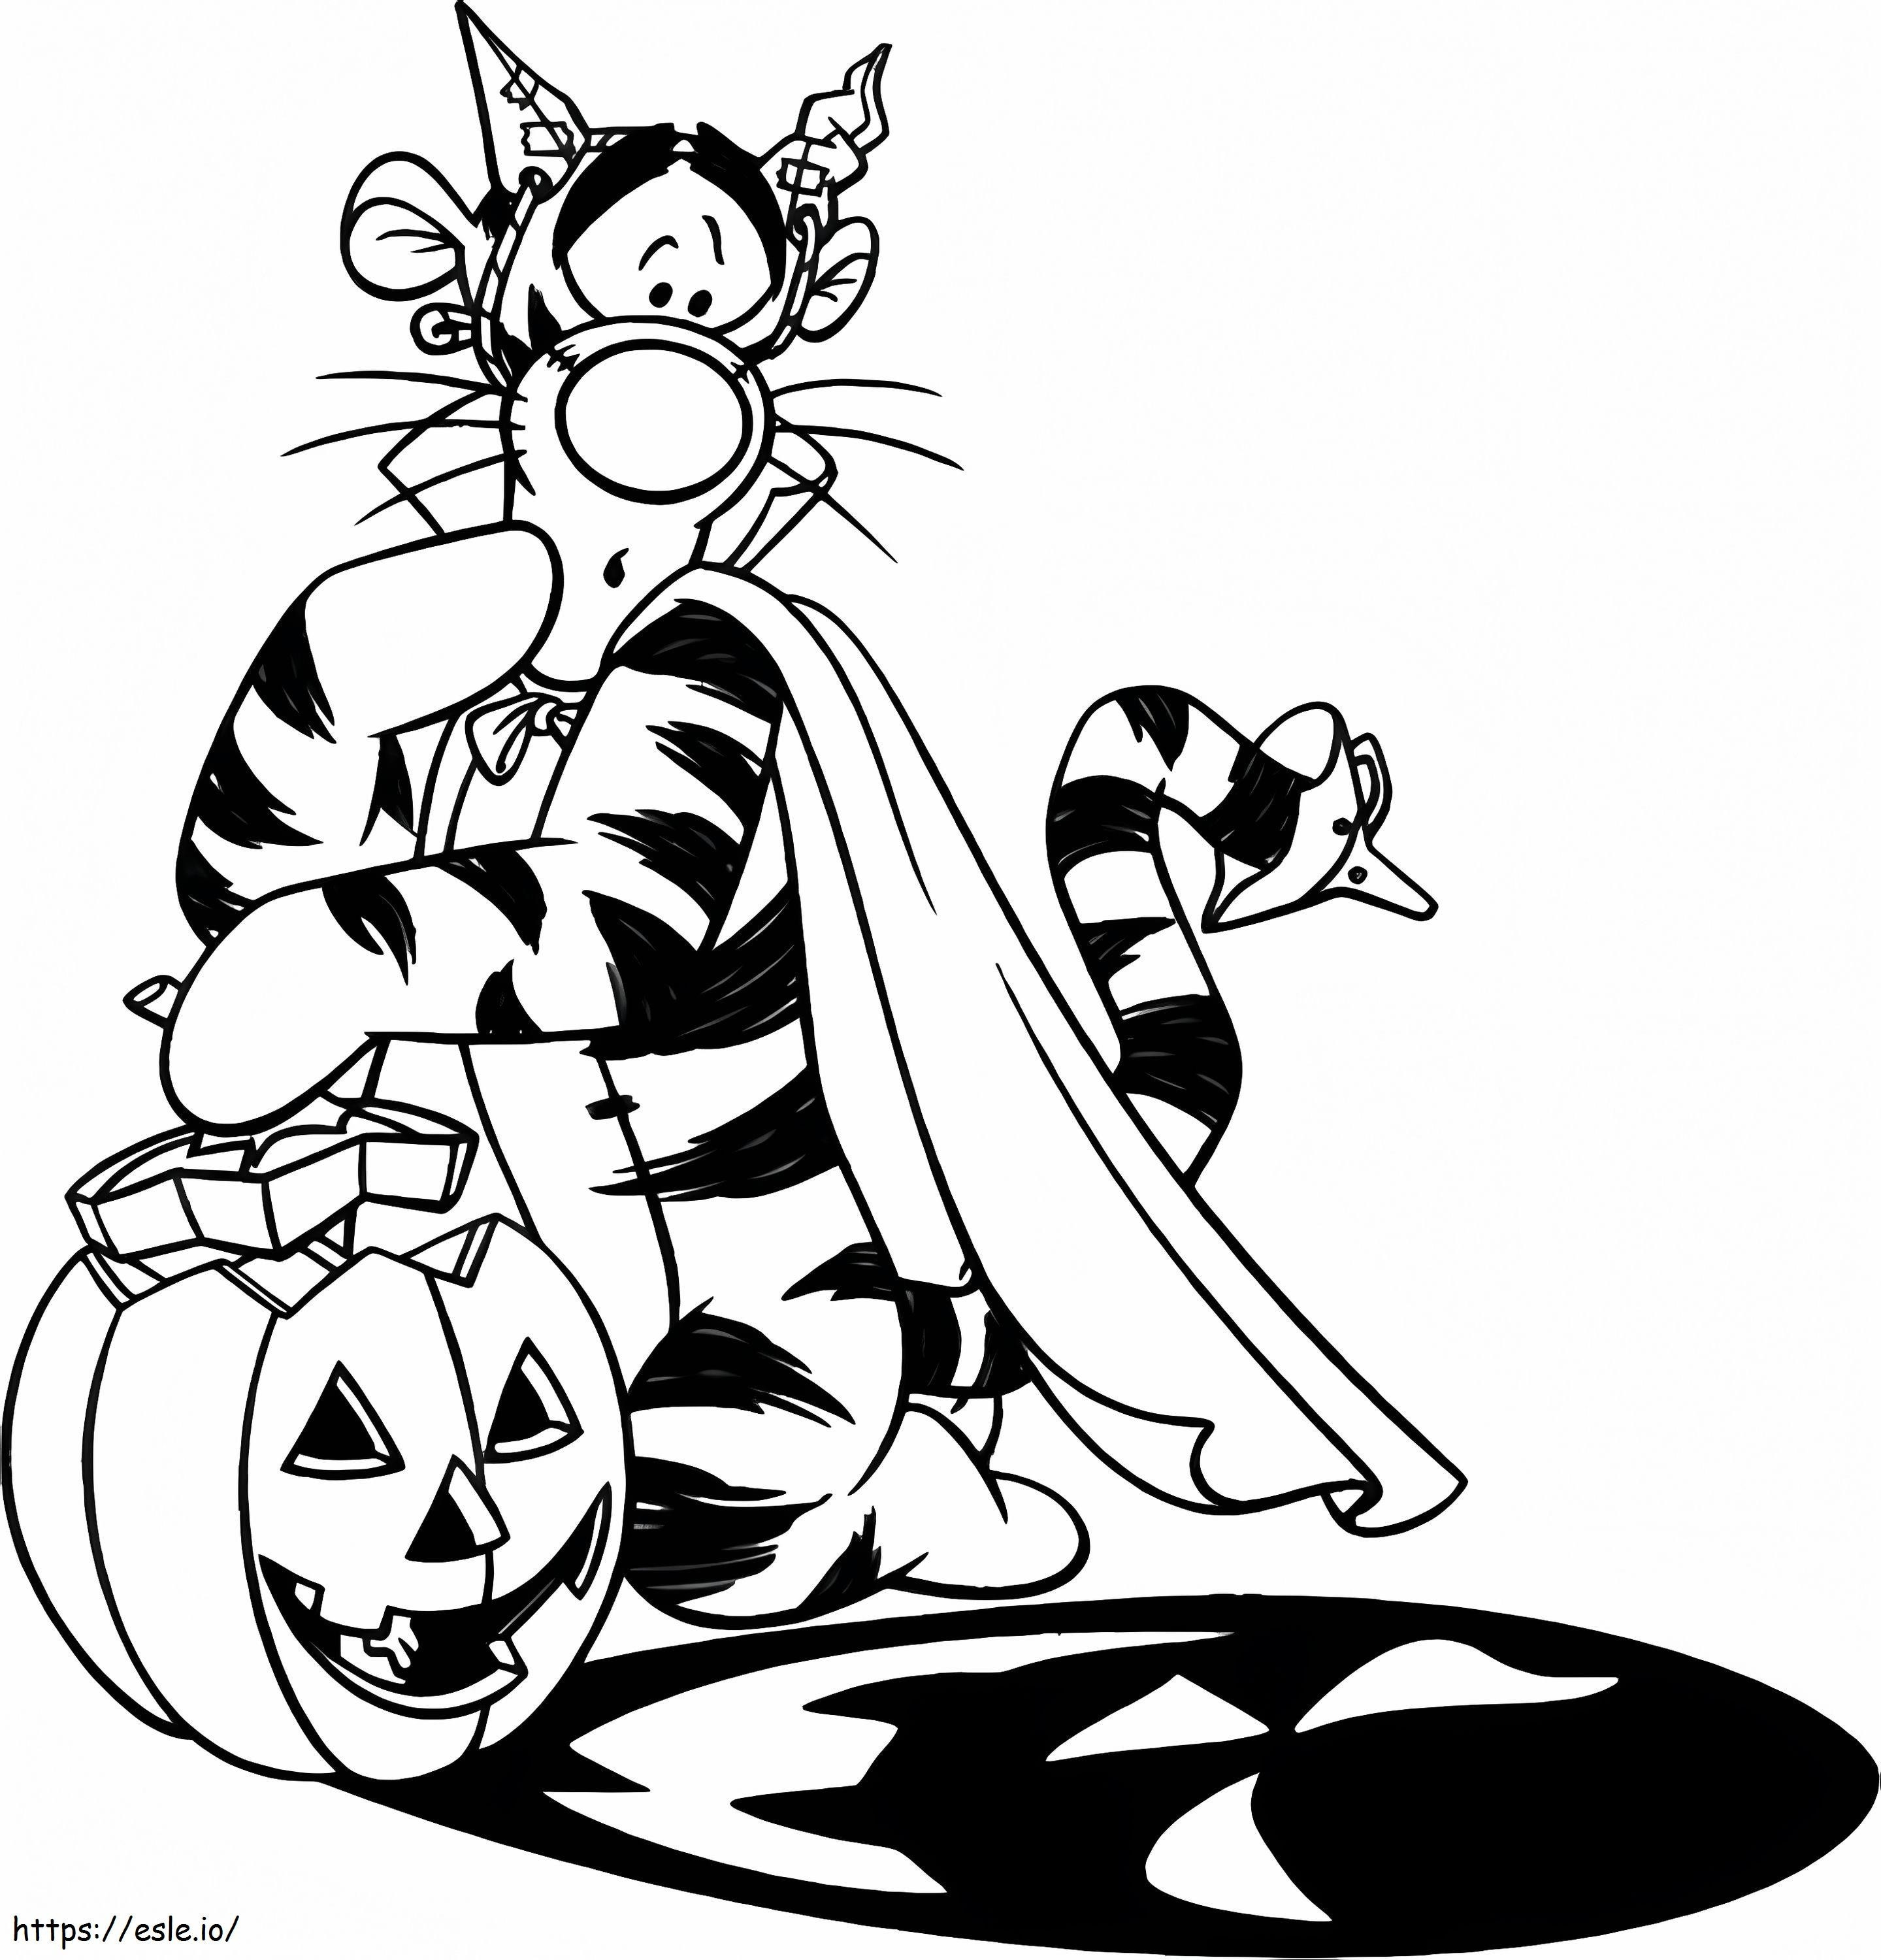 Tigre de Halloween para colorir